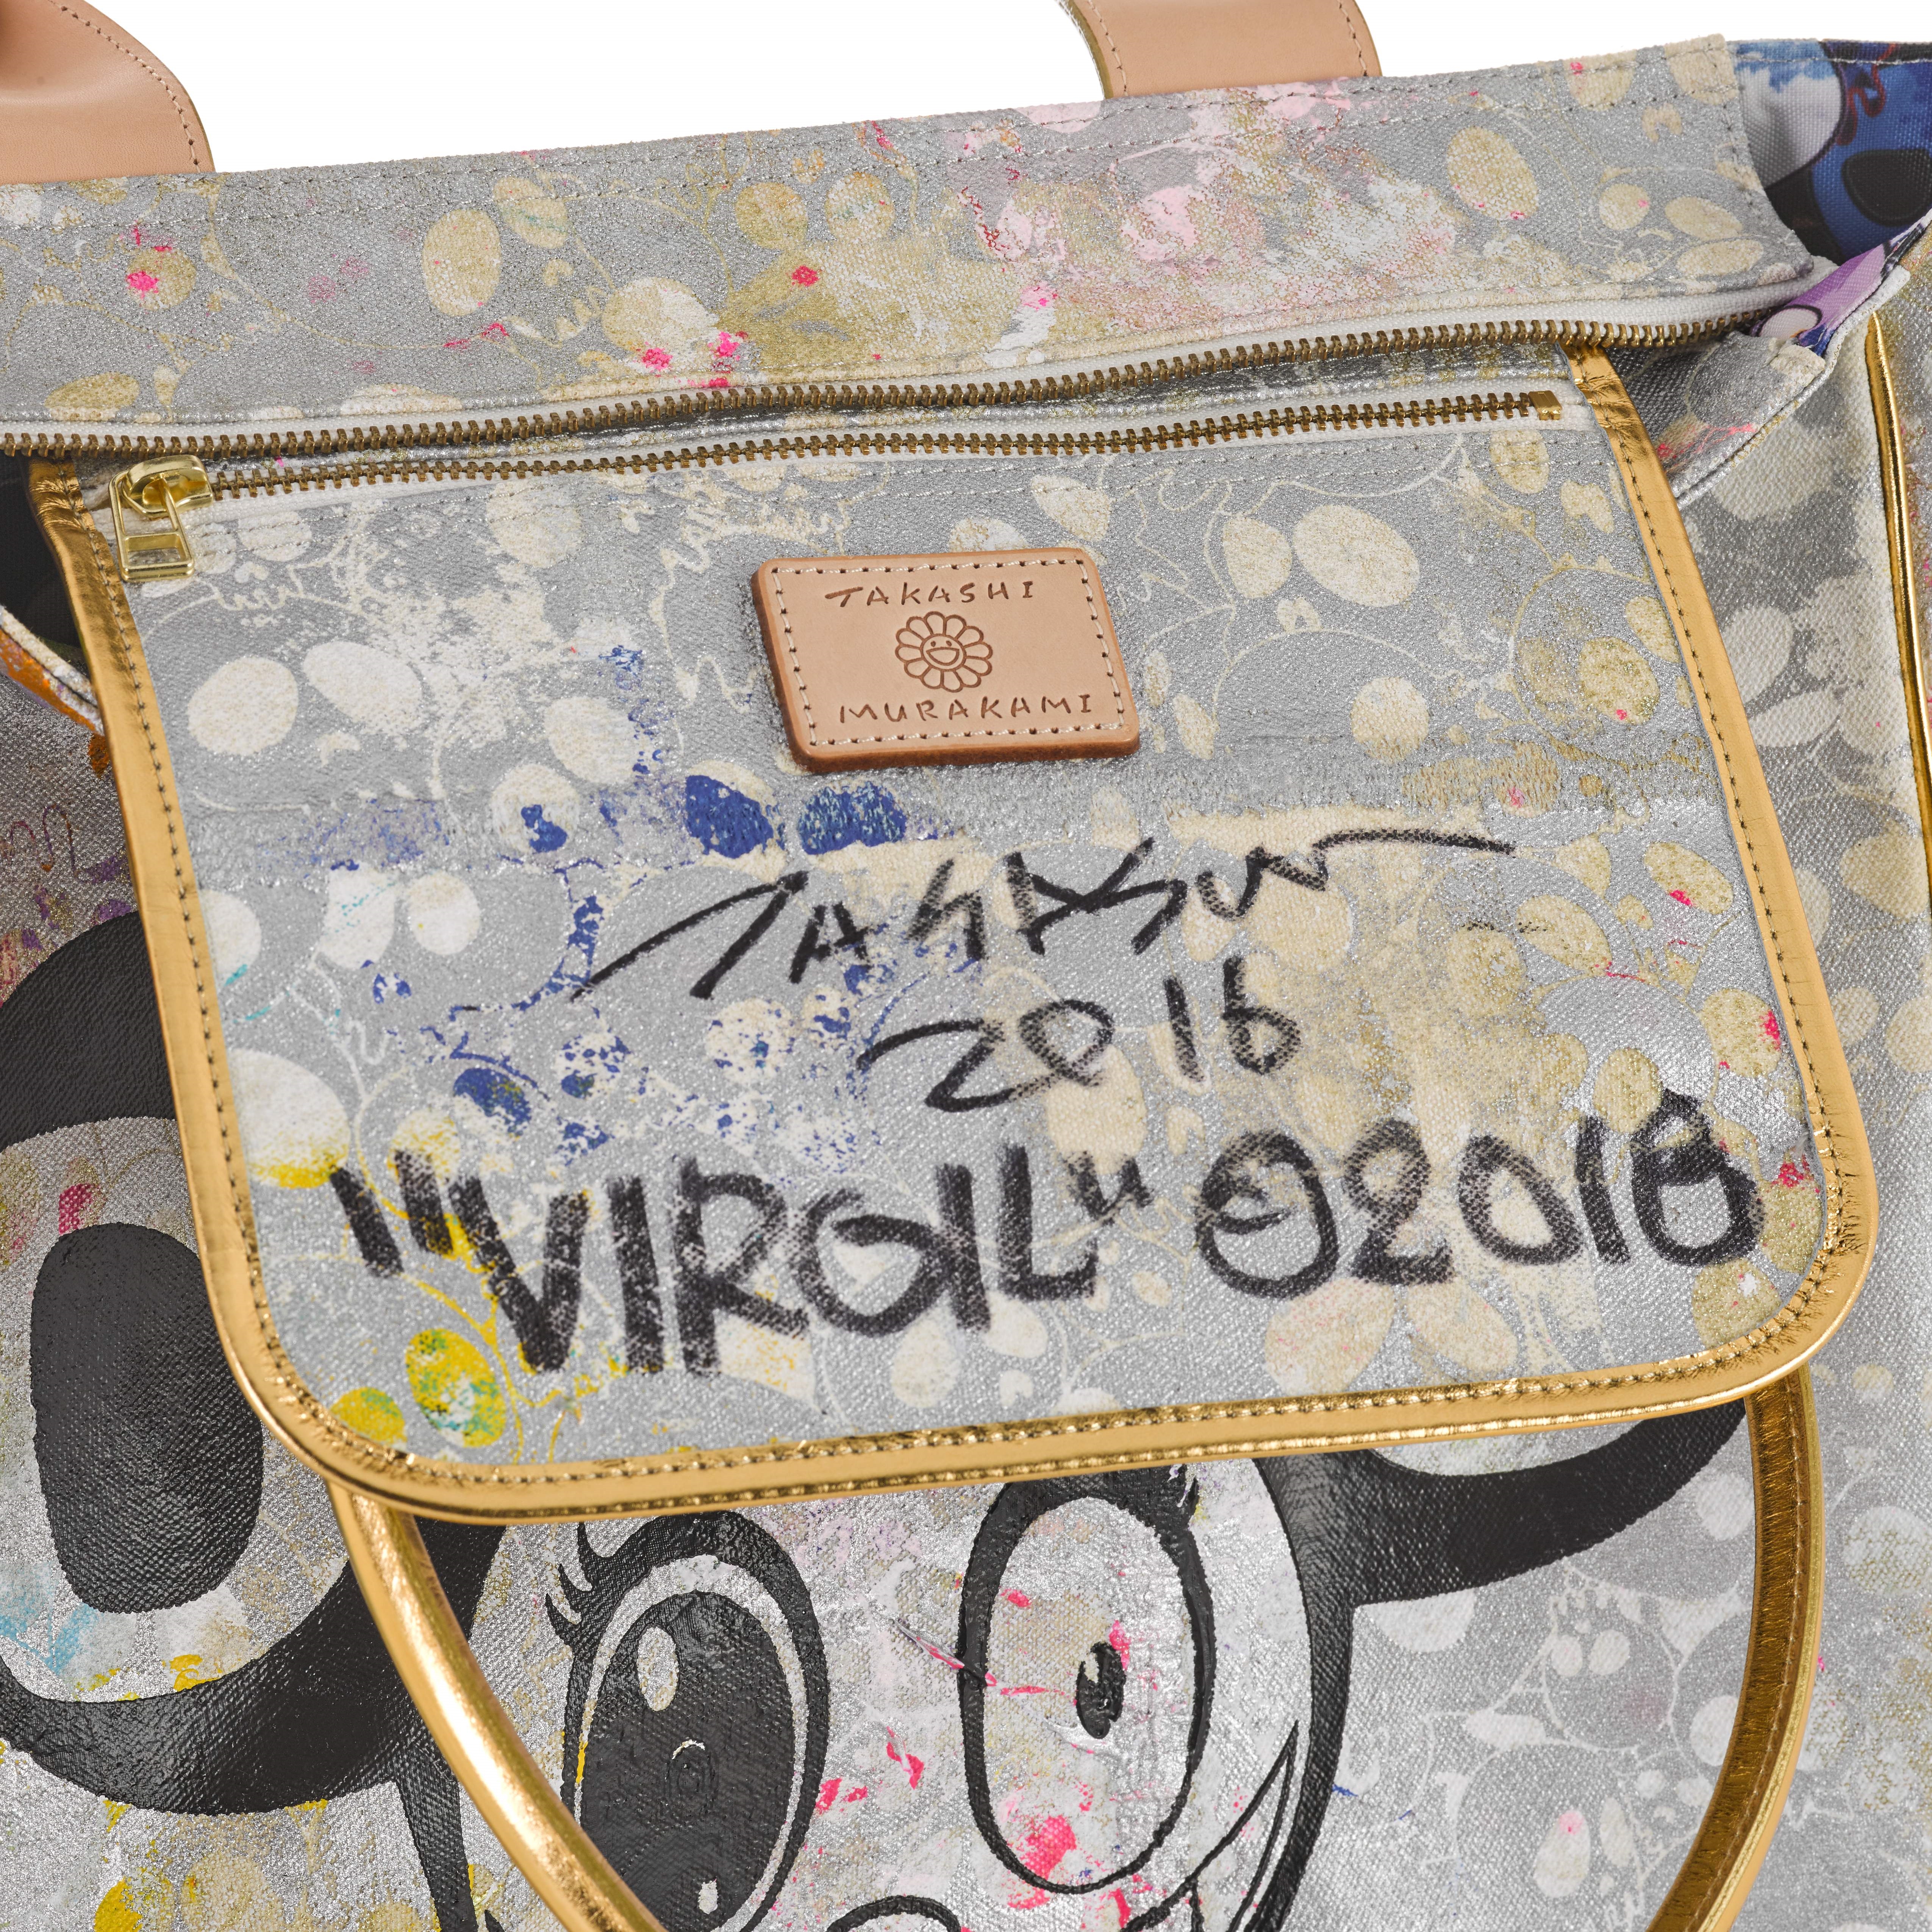 Takashi Murakami x Virgil Abloh Tote Bag Collab